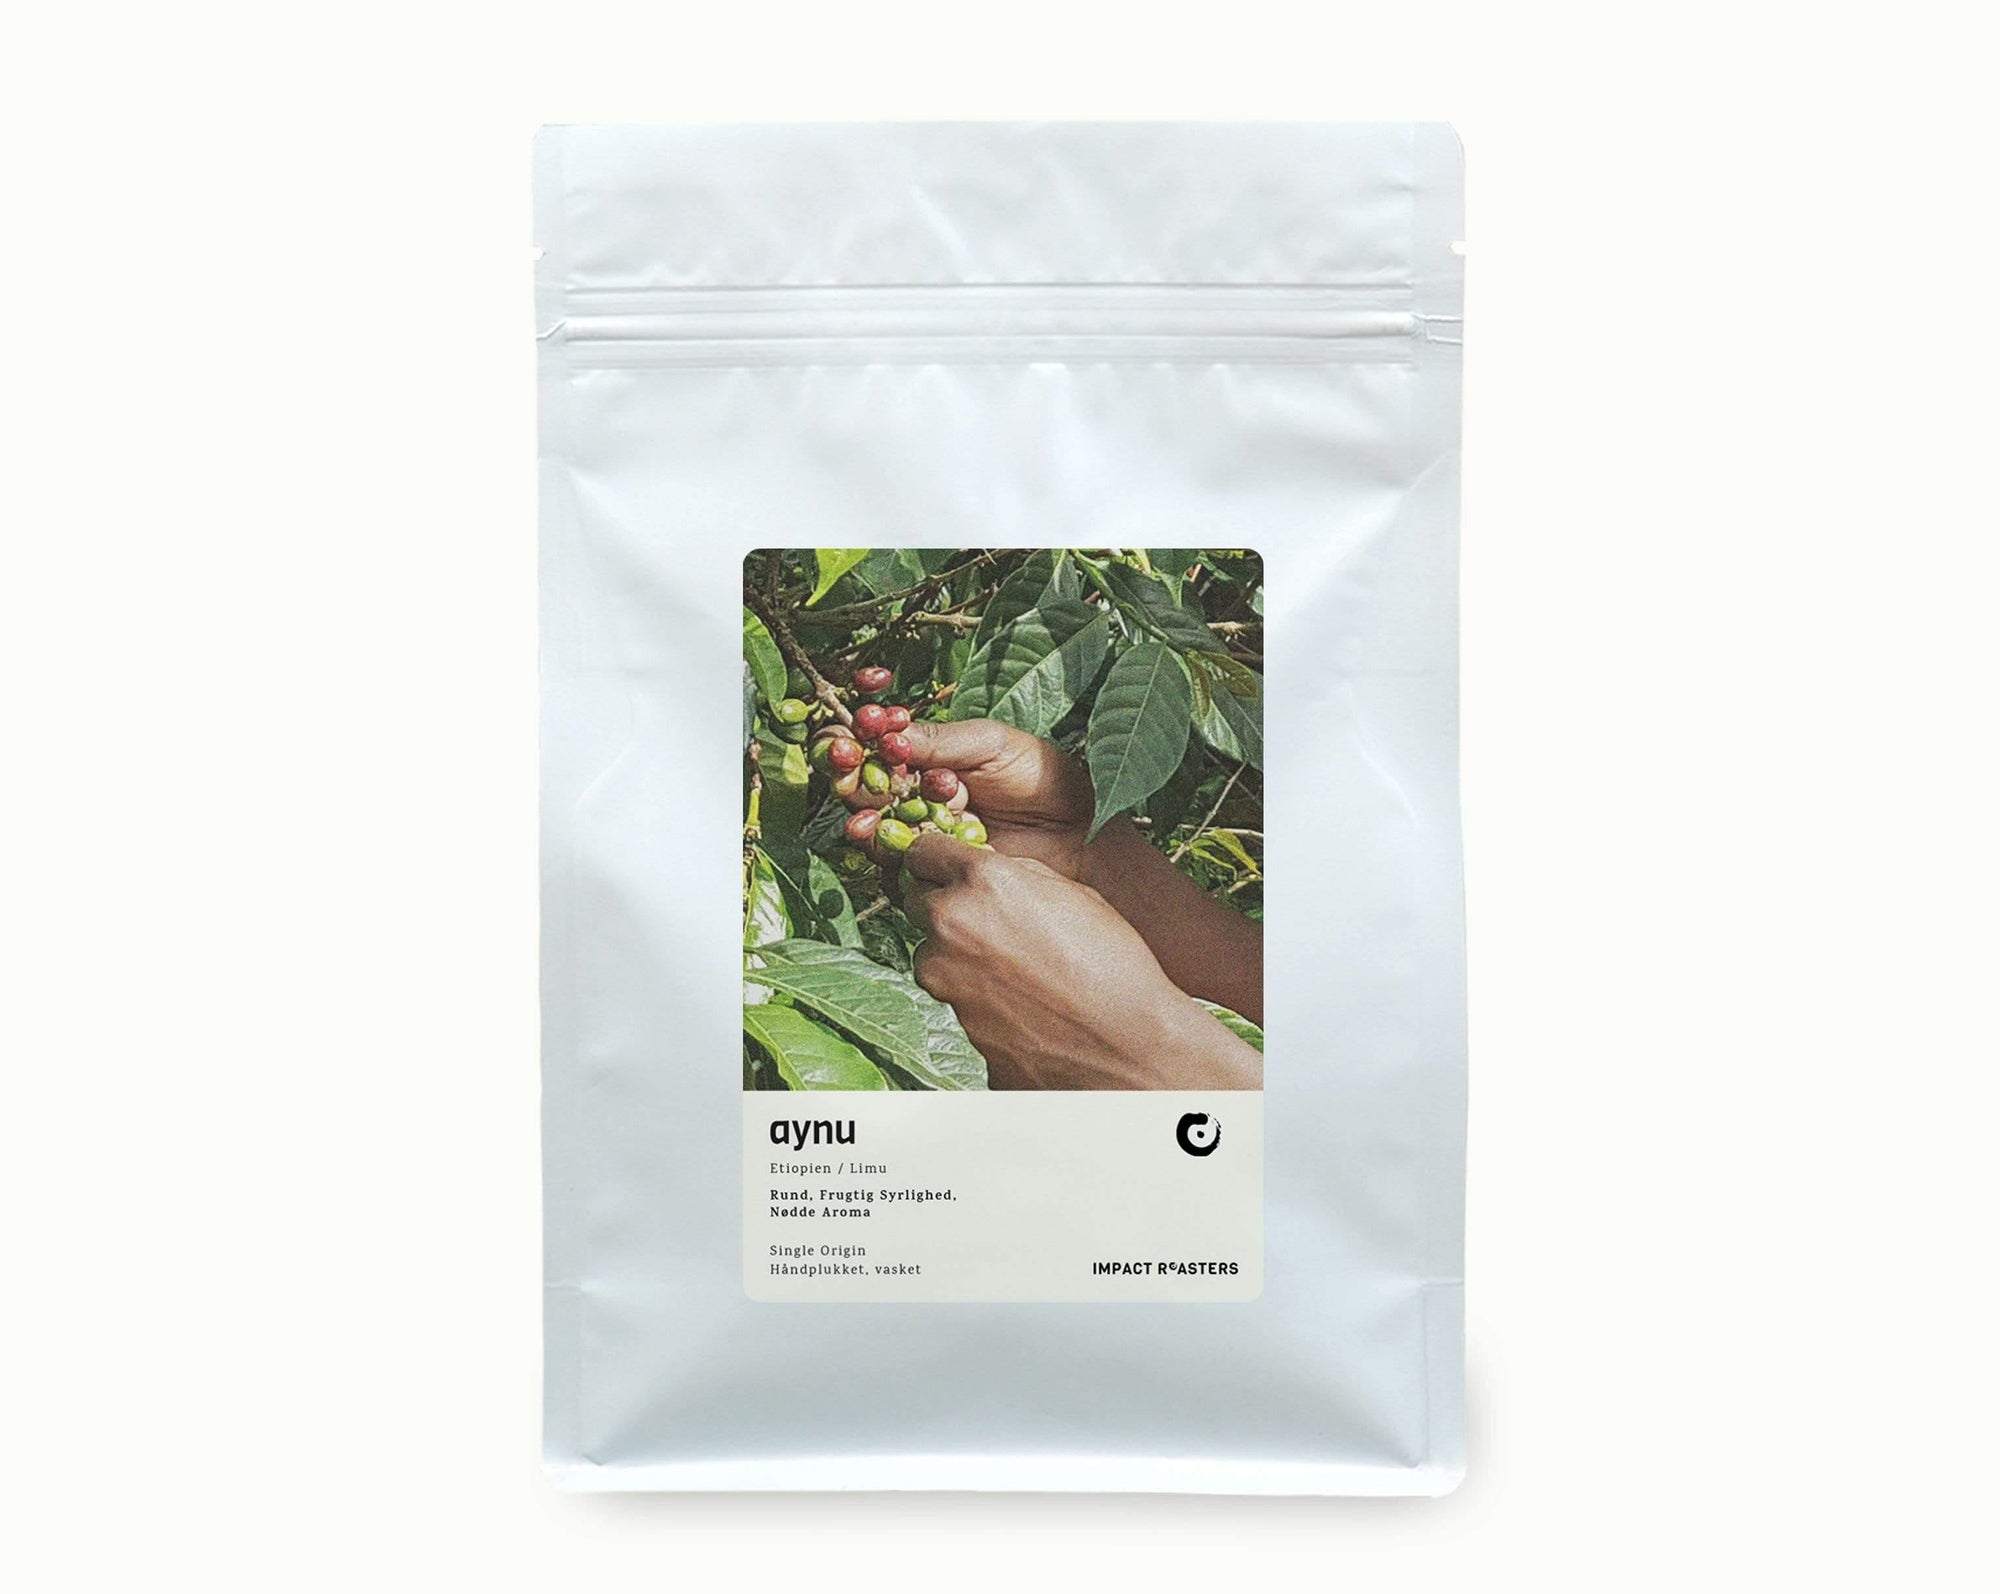  Aynu bag of Ethiopian coffee beans from Limu region